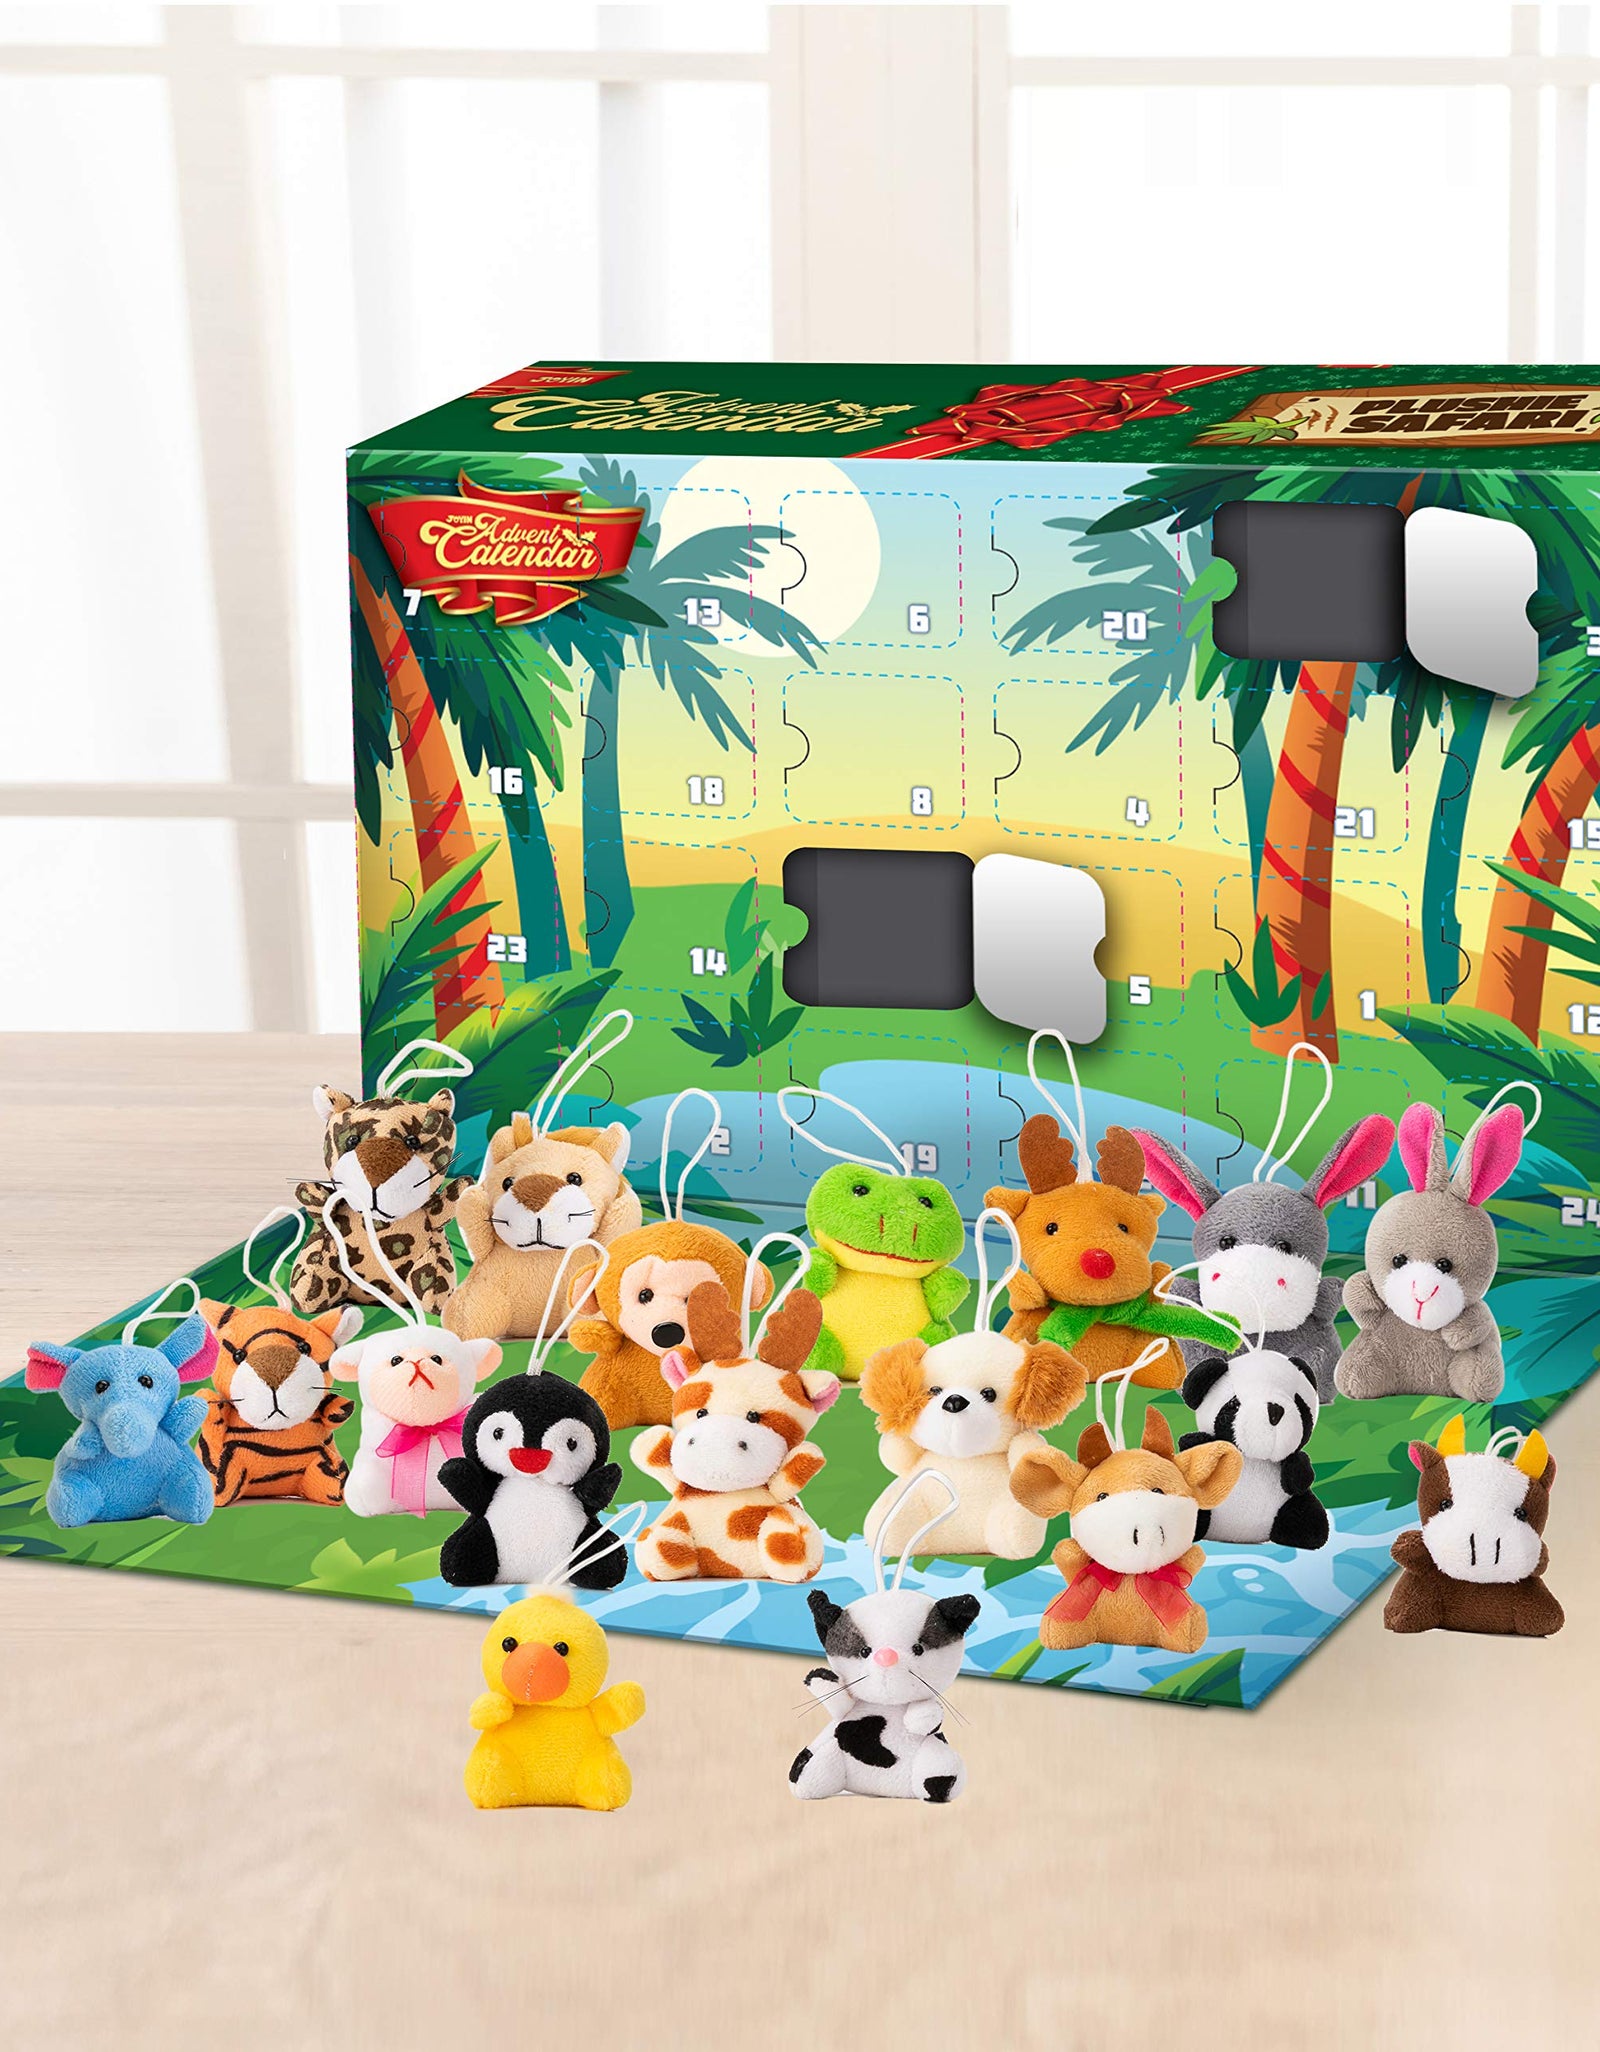 JOYIN 2021 Mini Animal Plush Advent Calendar Christmas 24 Days Countdown Advent Calendar with 24 Animal Plush Toys